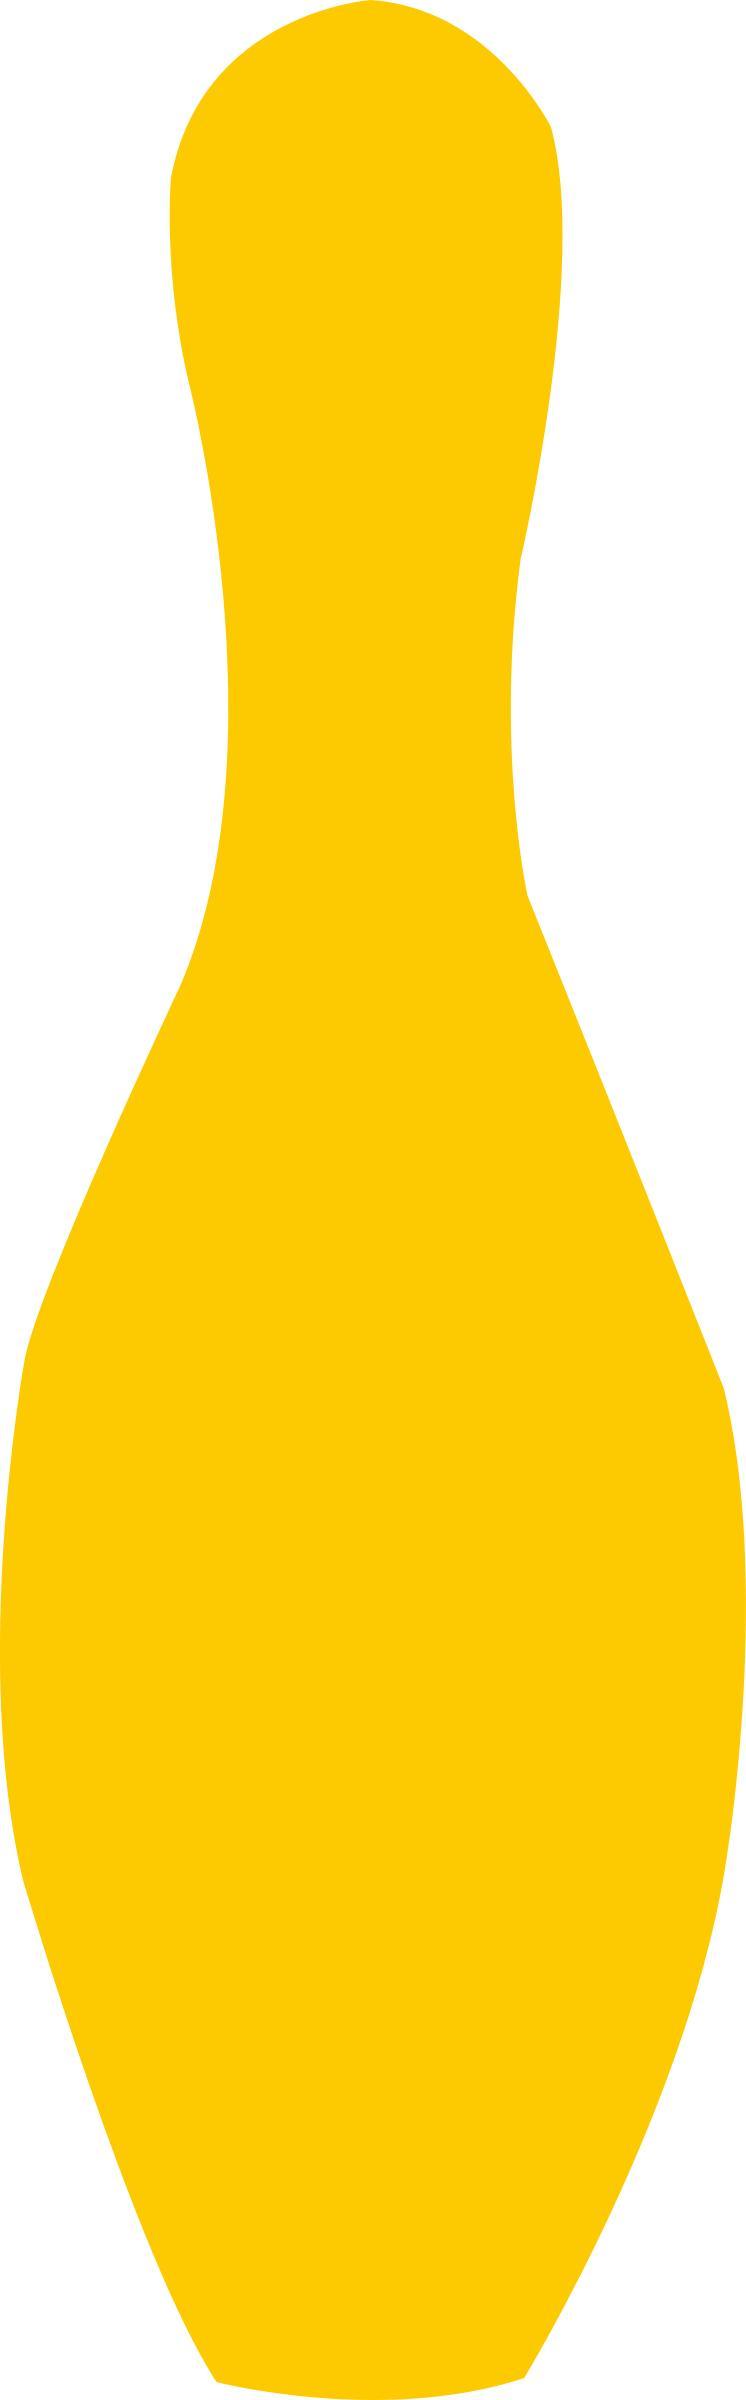 bowling pin yellow png transparent